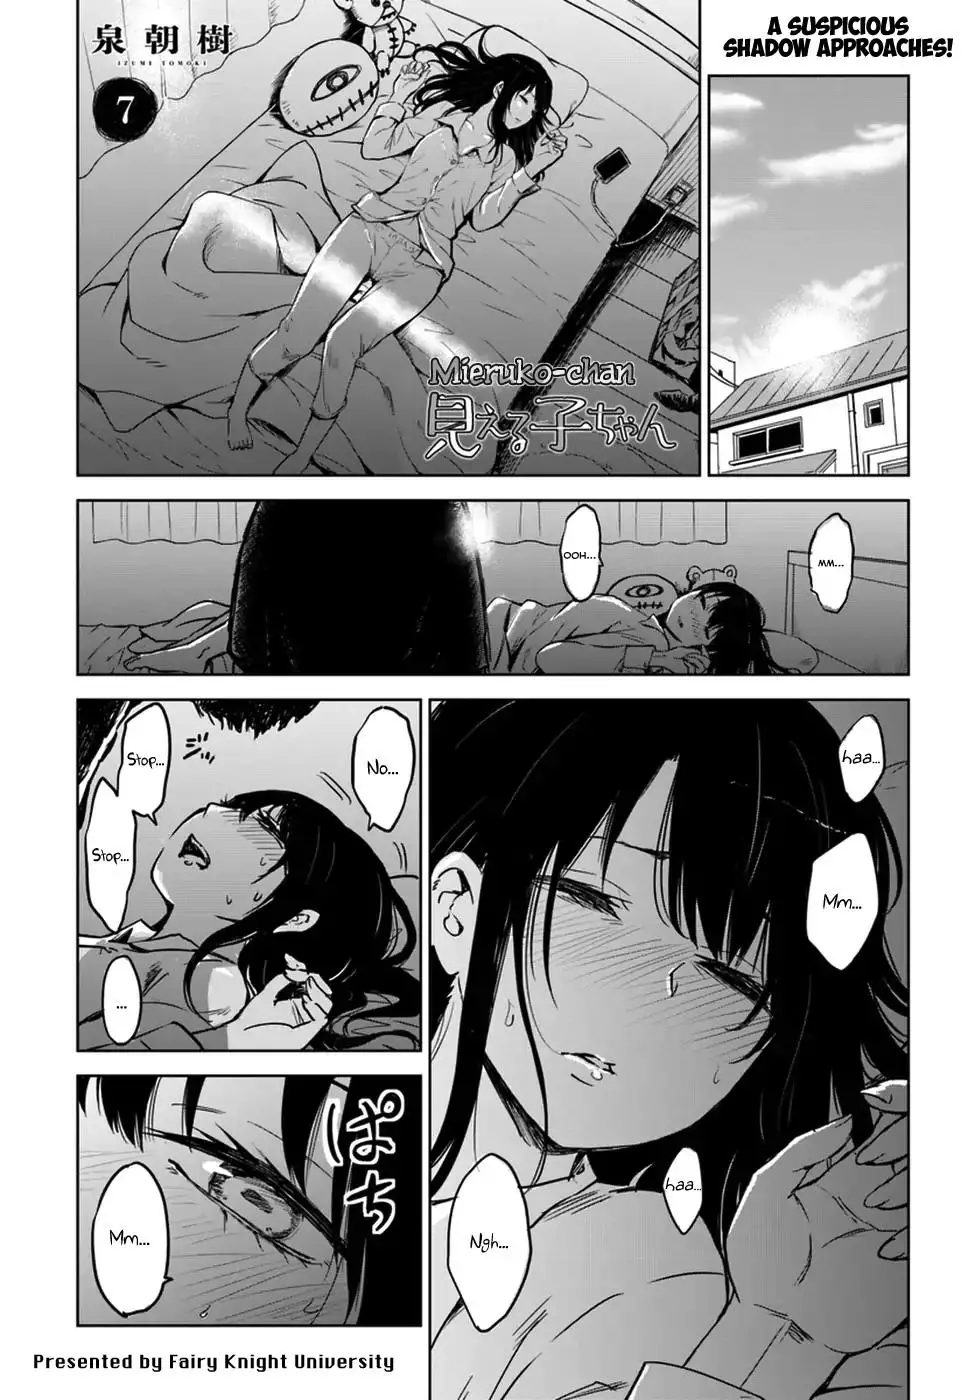 Mieruko-chan - 7 page 0